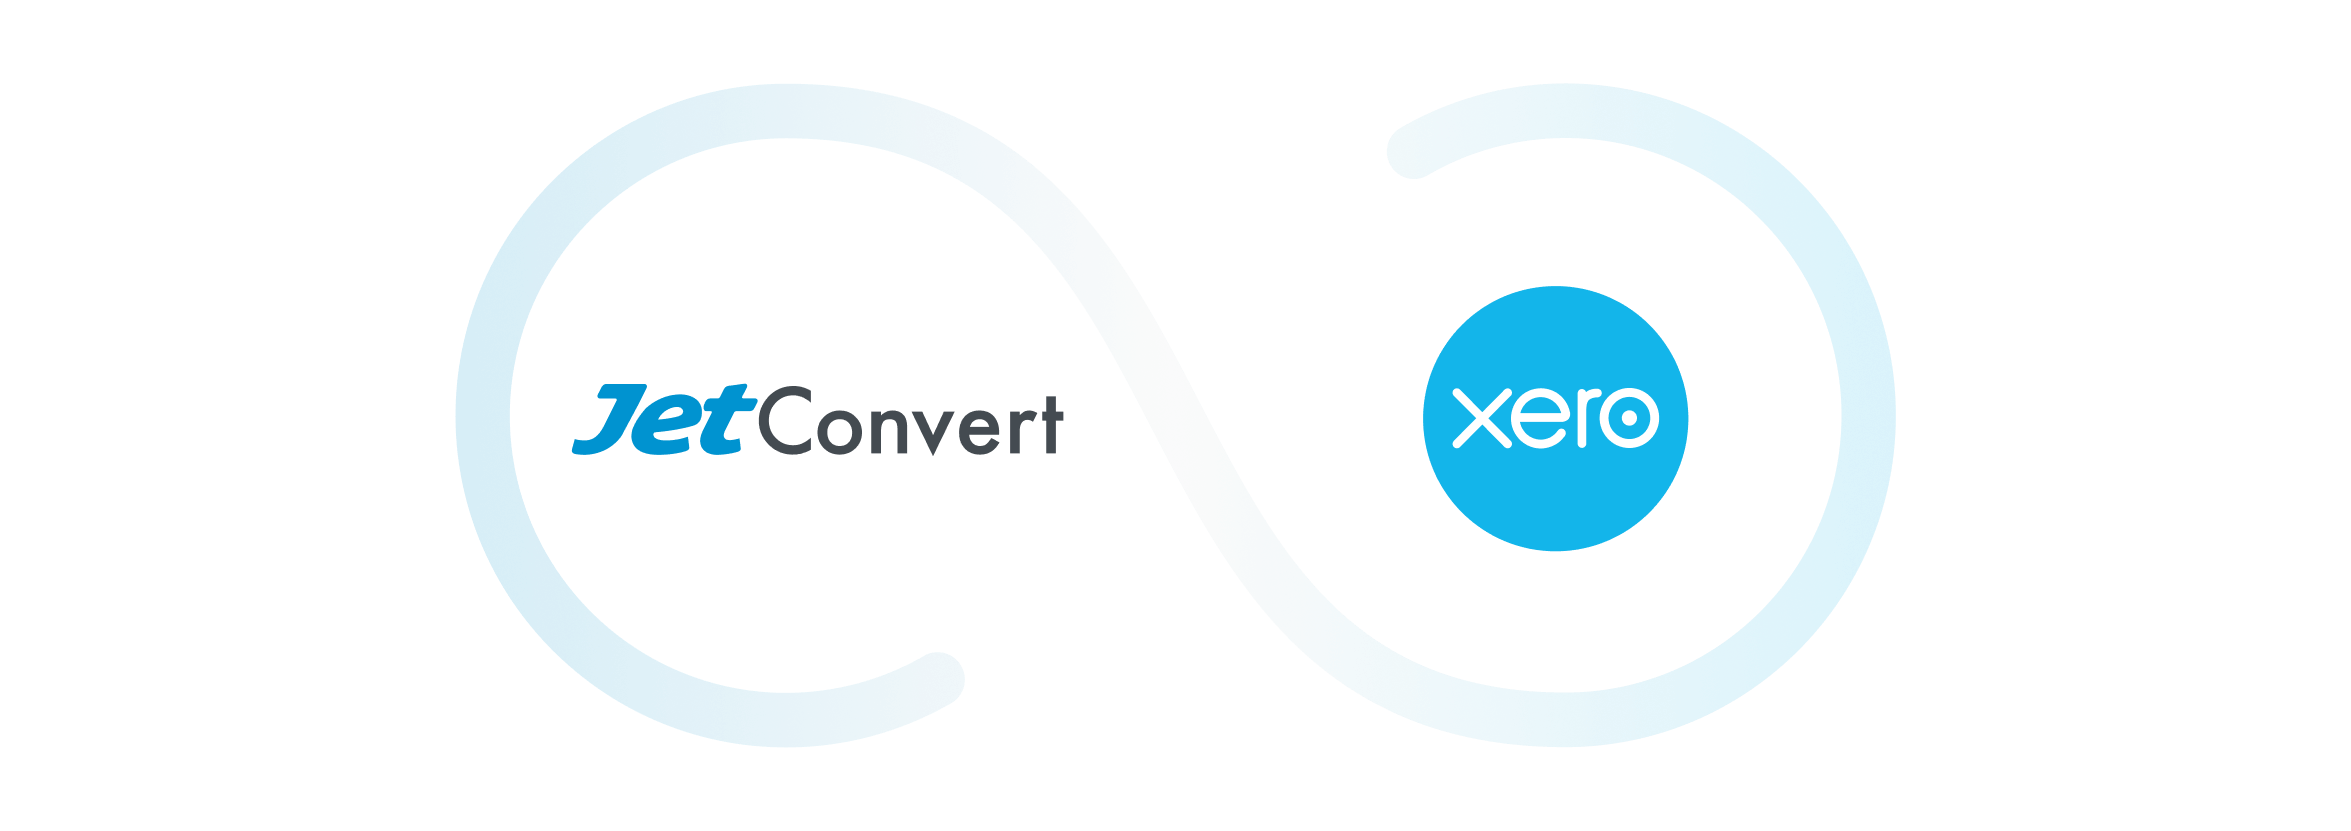 JetConvert & Xero logos